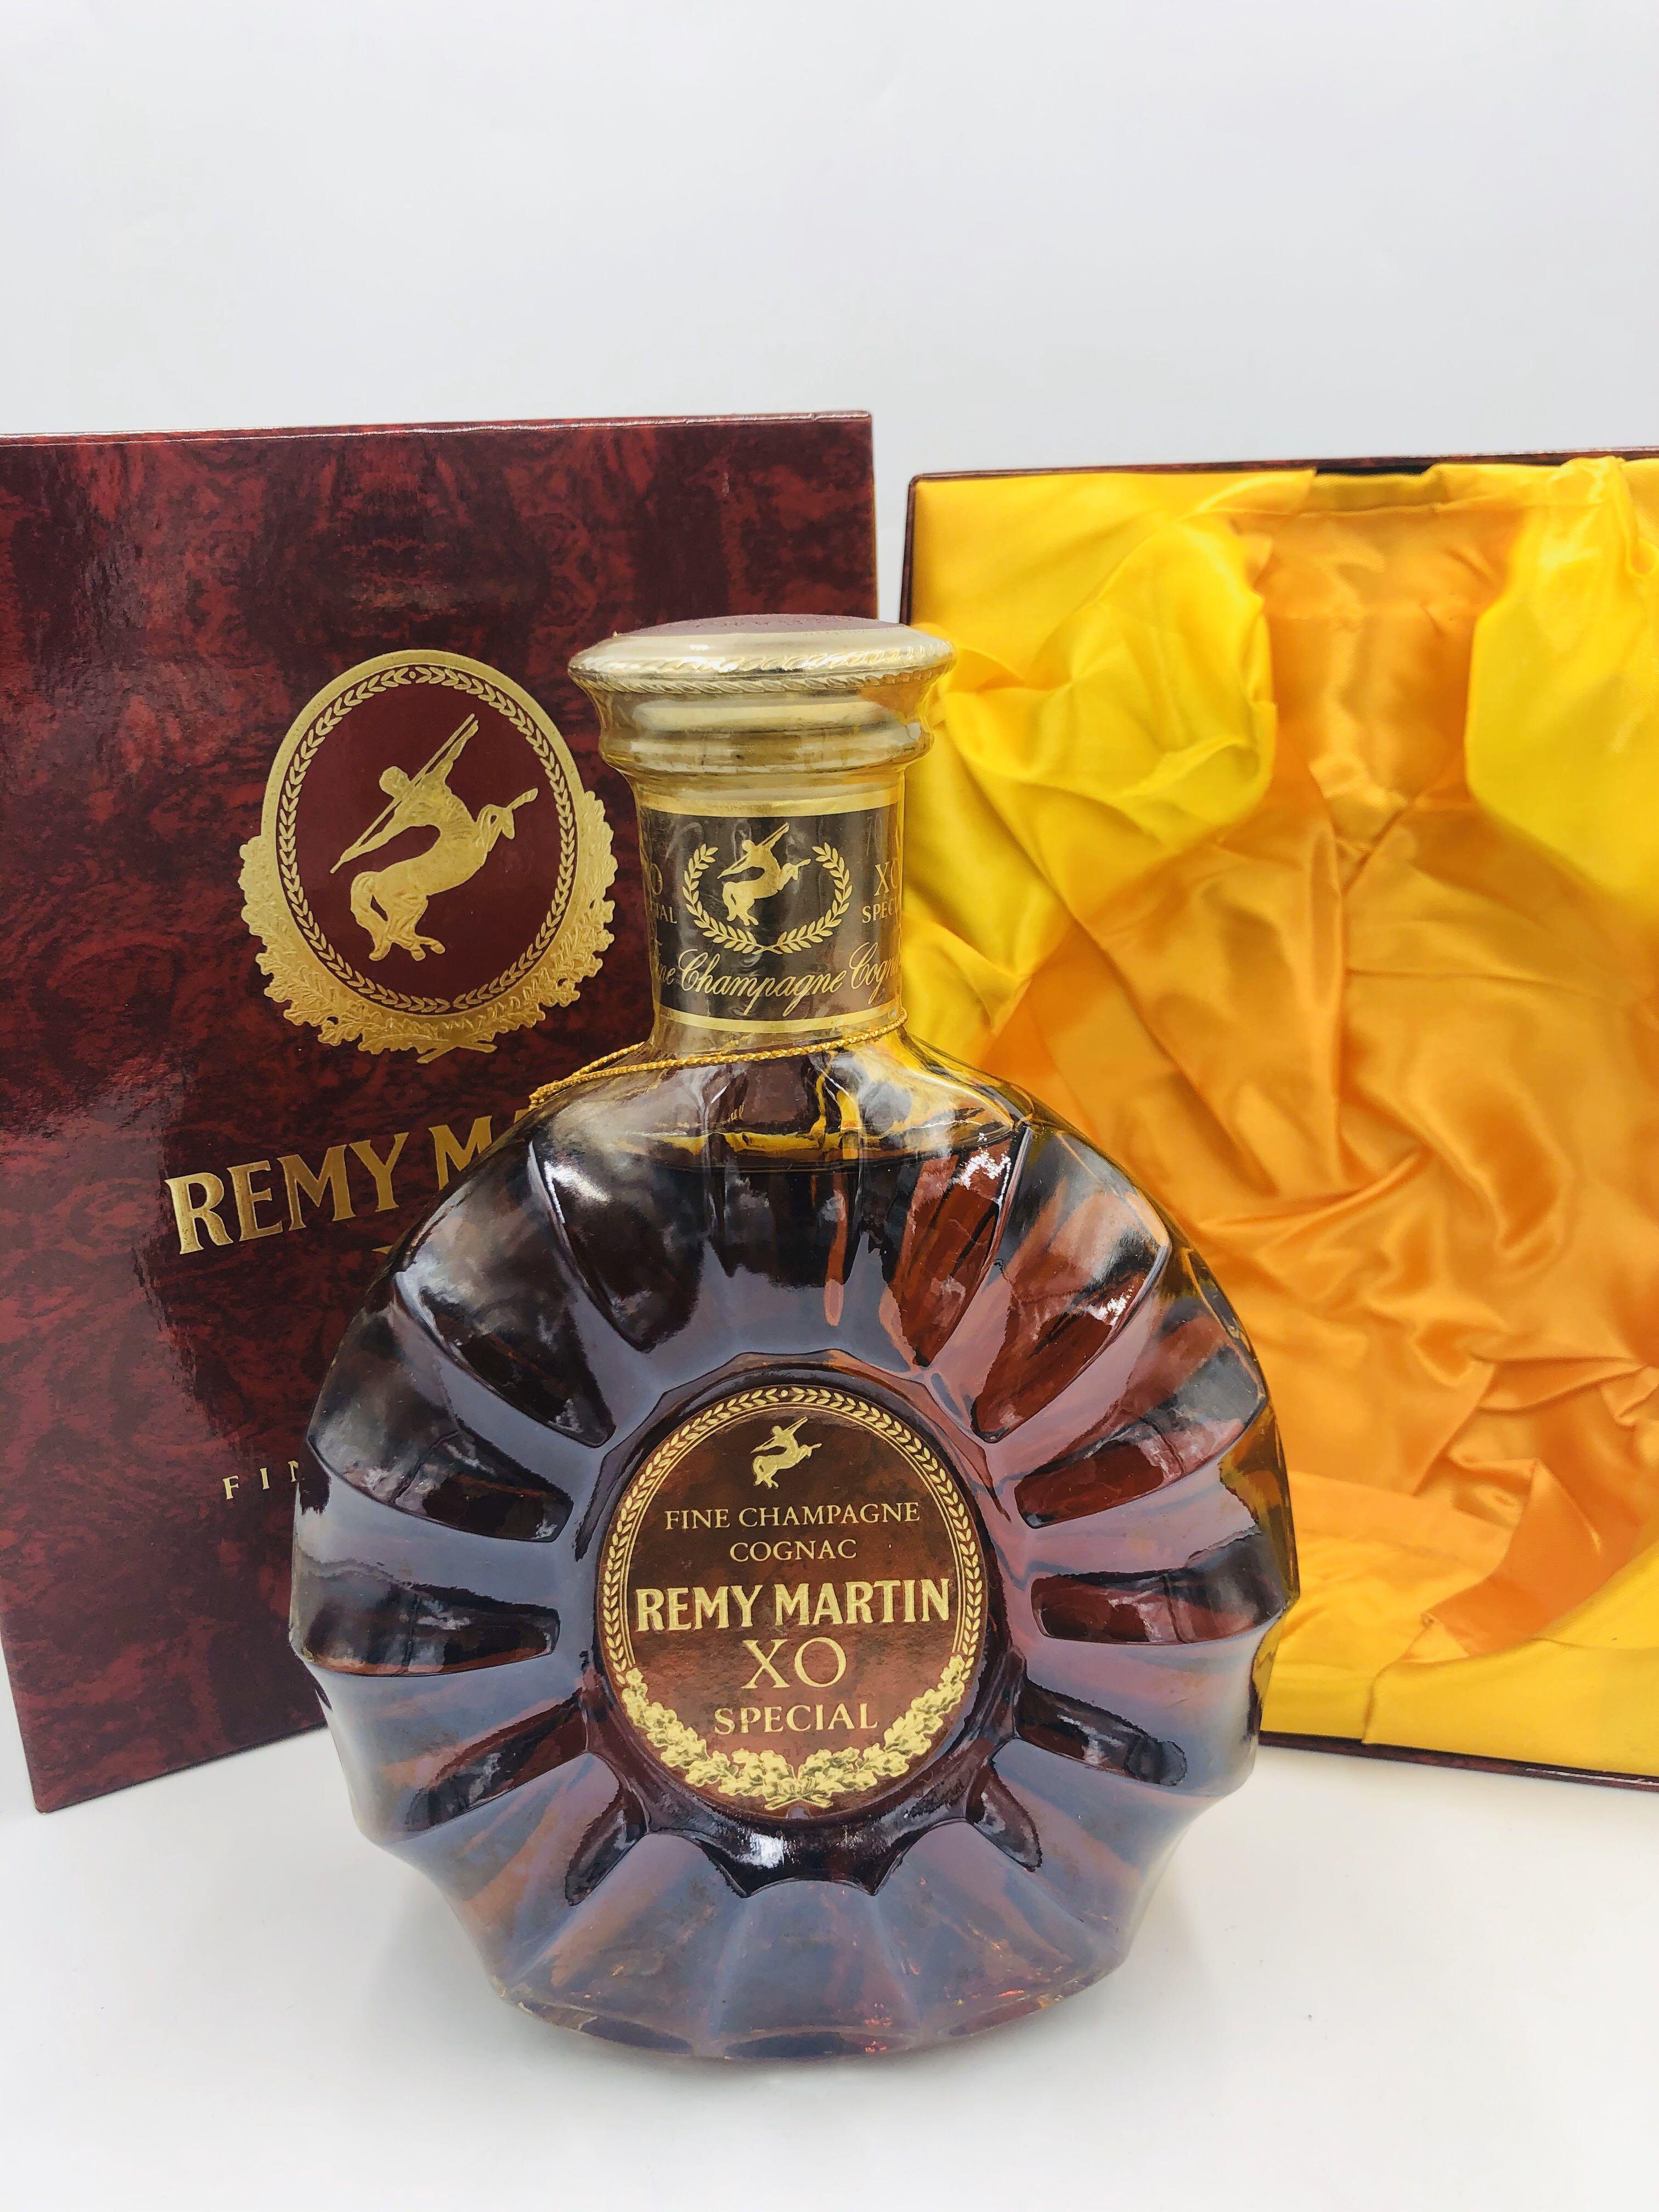 Remy Martin Xo Special Cognac 700ml 80年代人頭馬干邑禮盒裝, 嘢食 